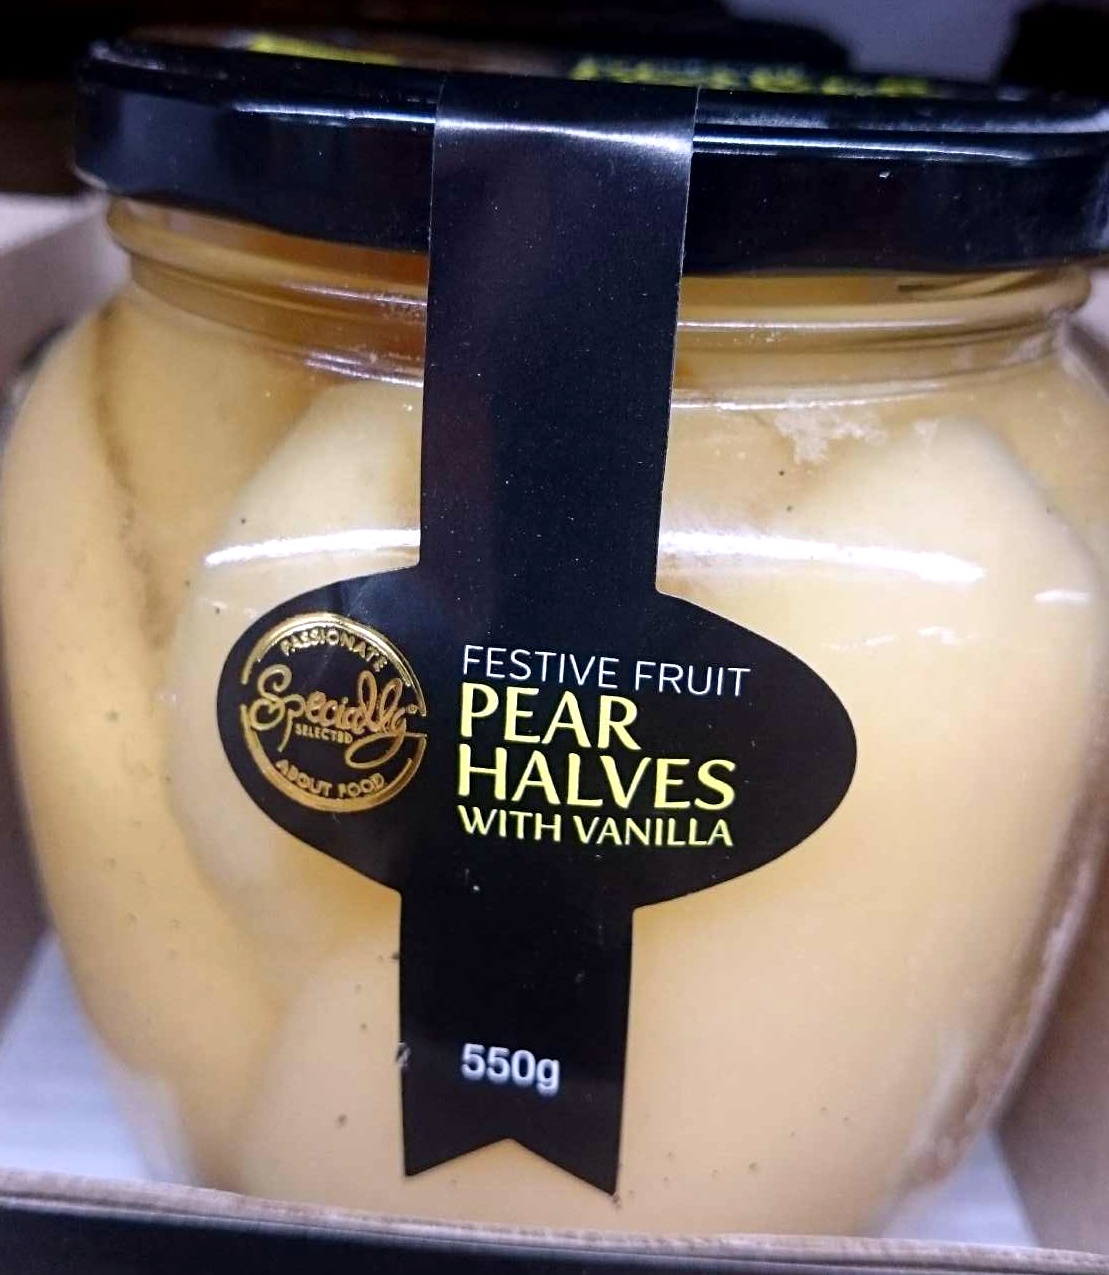 Festive Fruit Pear Halves With Vanilla - Product